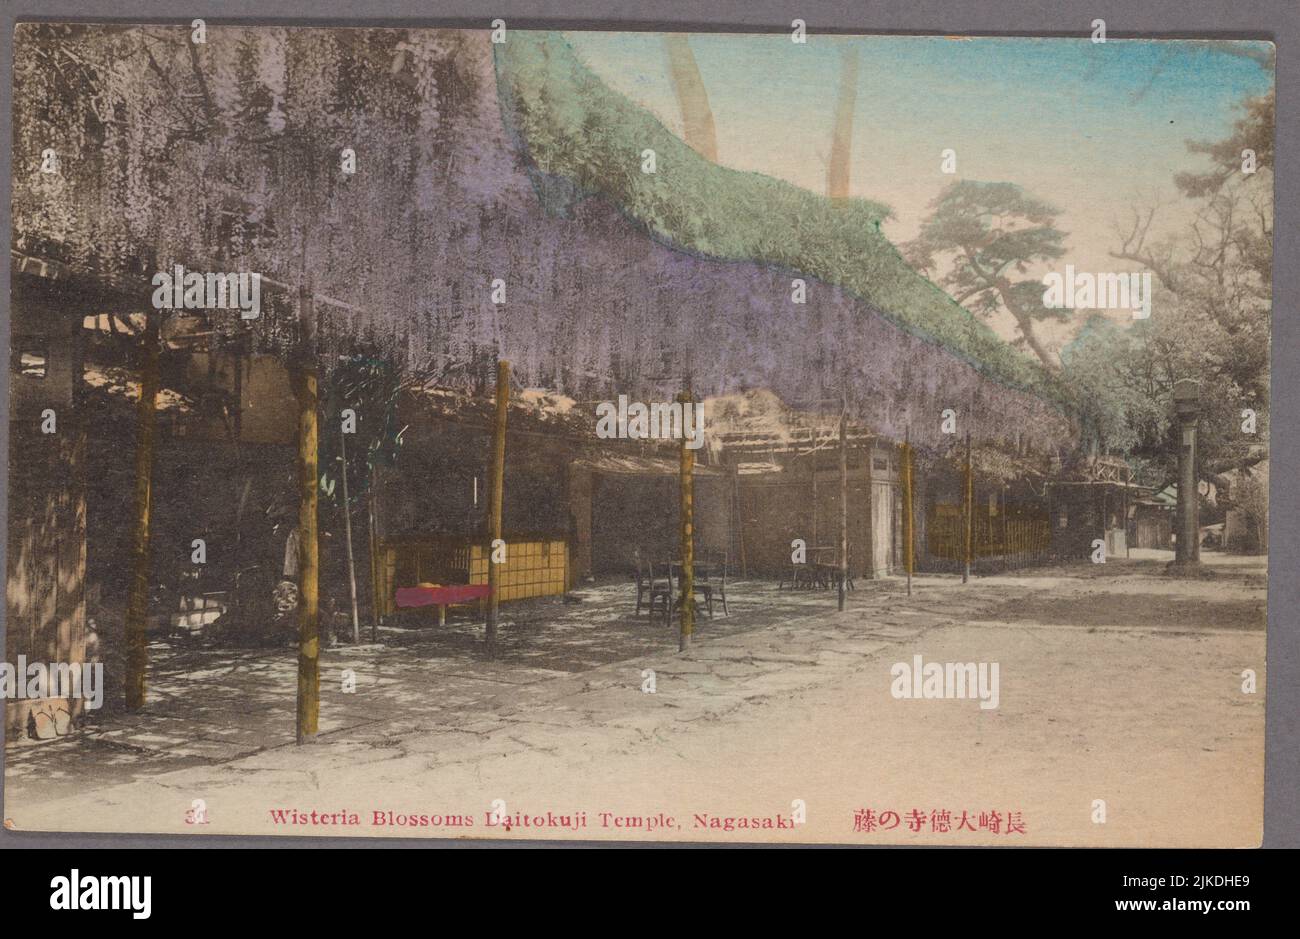 La wisteria fleurit Temple Daitokuji, Nagasaki. Pacific Pursuit : cartes postales Japon - Nagasaki. Lieu: Made in Japan Éditeur: s.n. Nagasaki-shi Banque D'Images